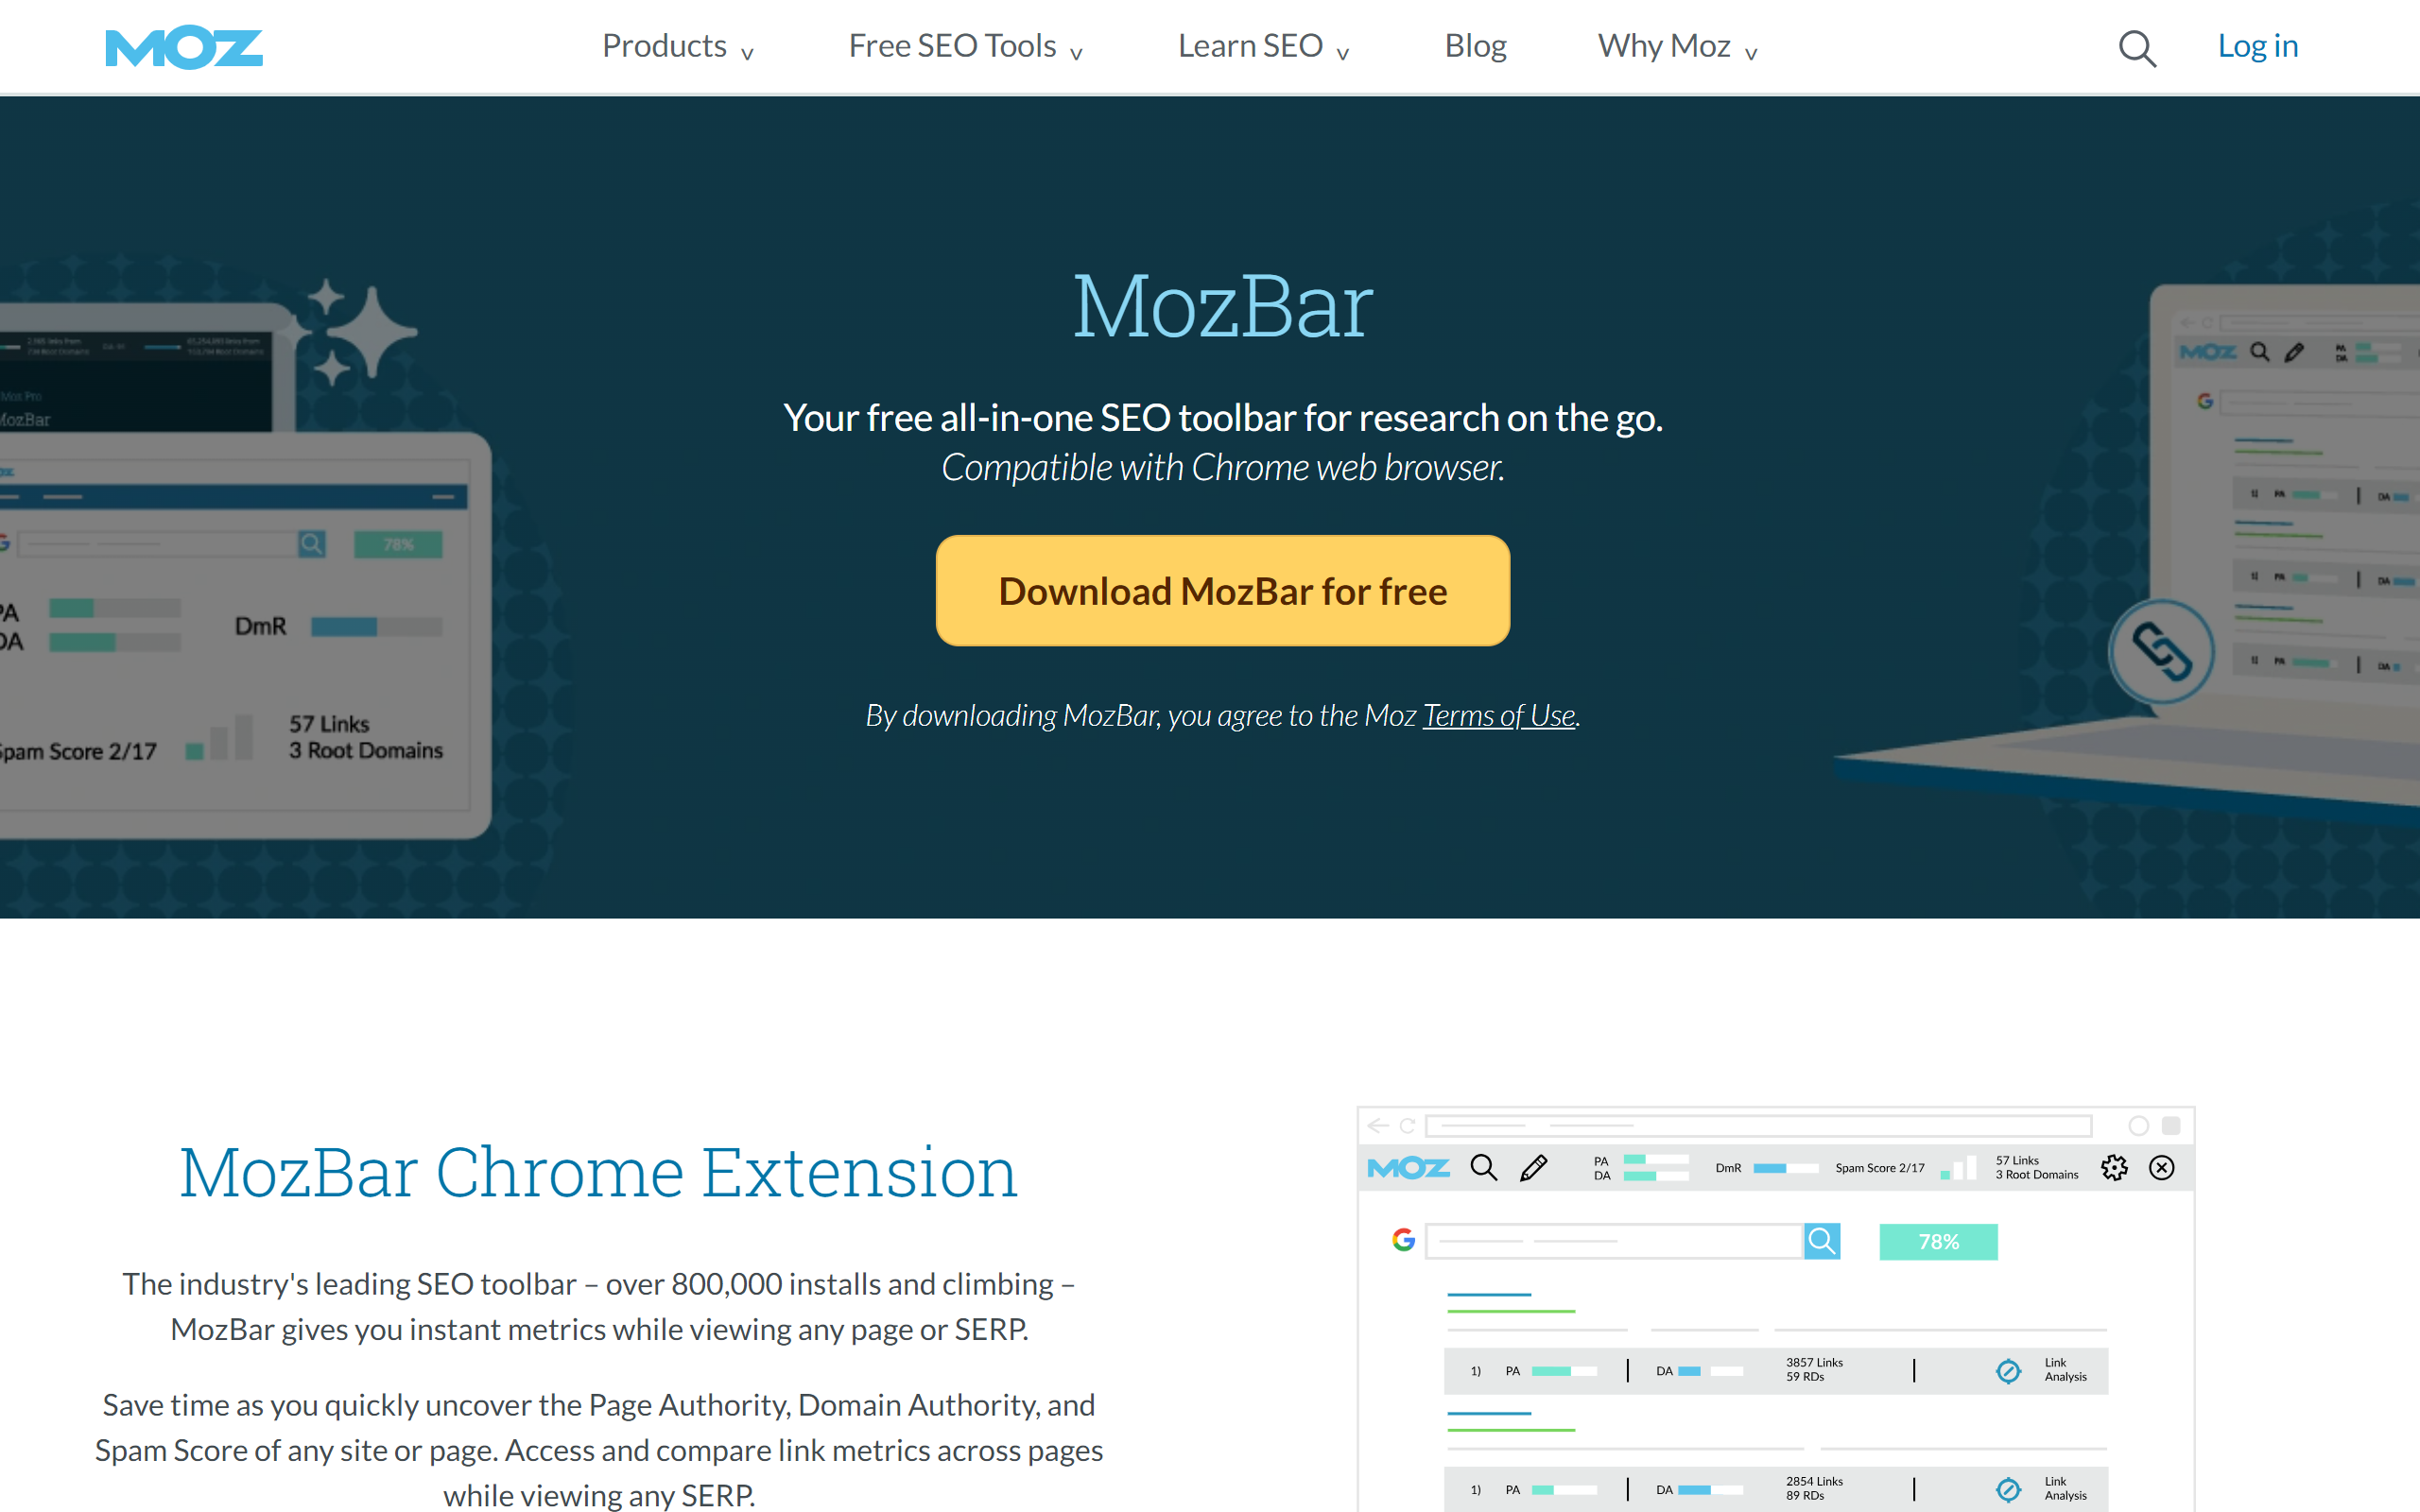 MozBar Competitor Analysis Tool